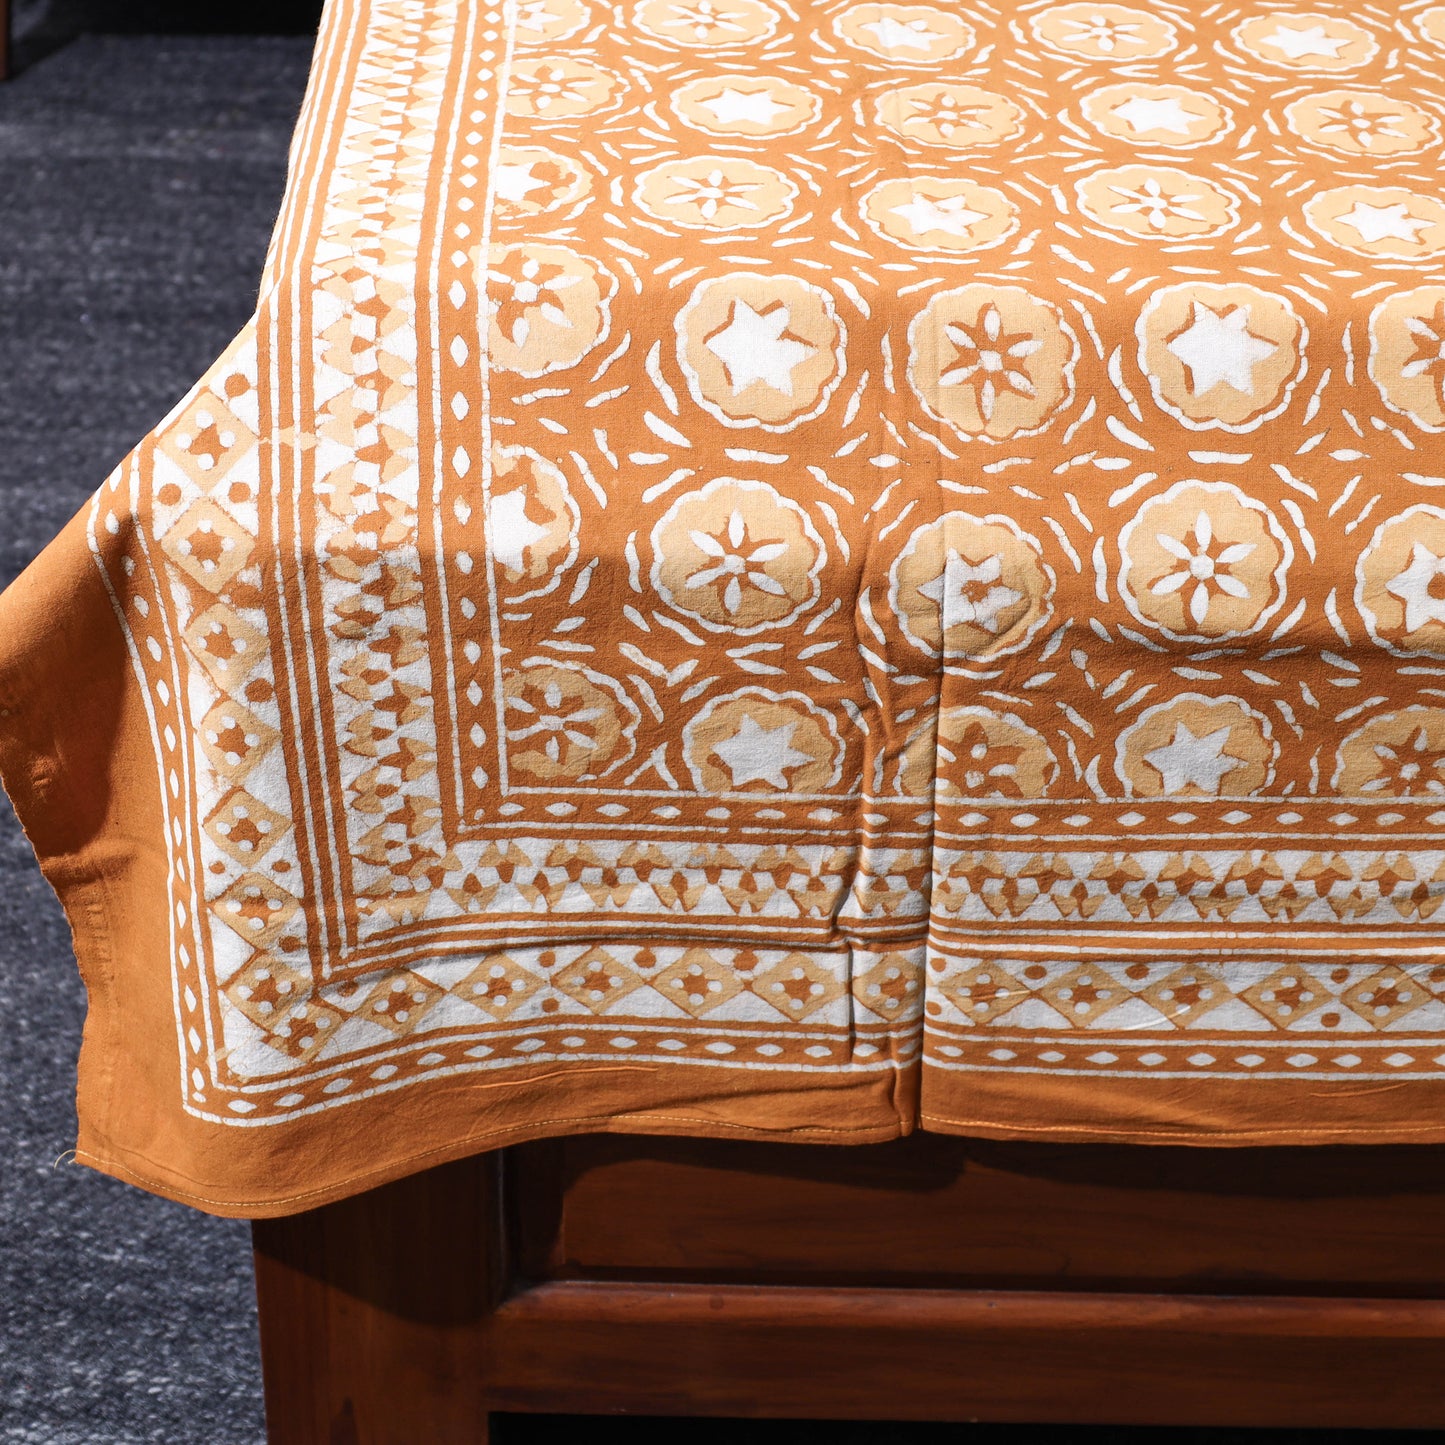 Brown - Bagru Dabu Hand Block Printed Cotton Single Bed Cover (90 x 60 in)